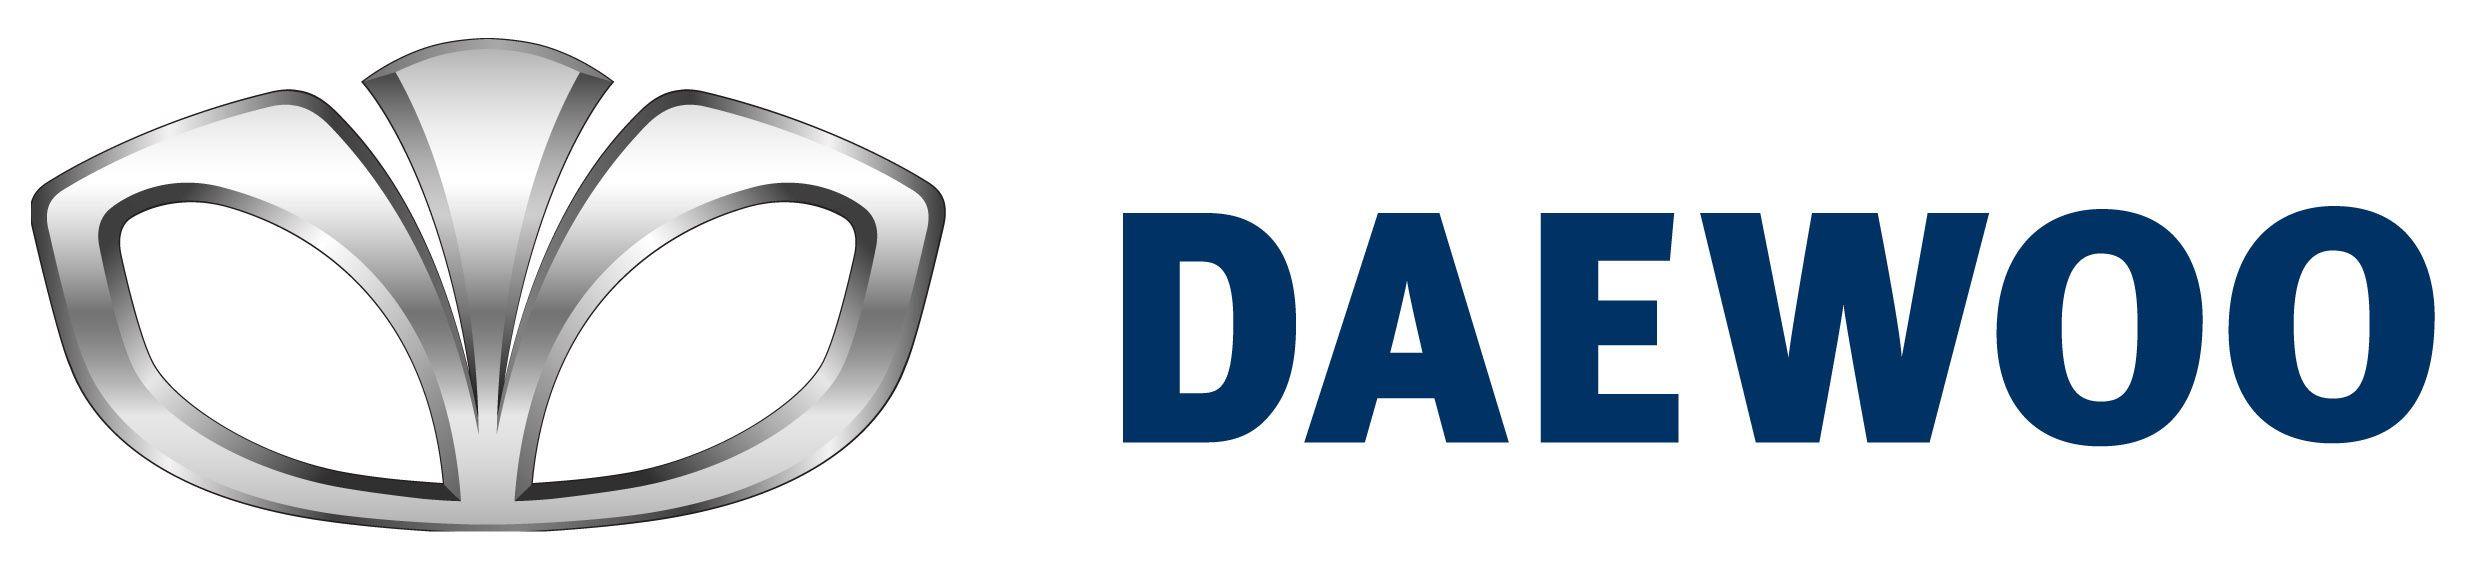 Old Daewoo Logo - Old Daewoo Logo | www.topsimages.com